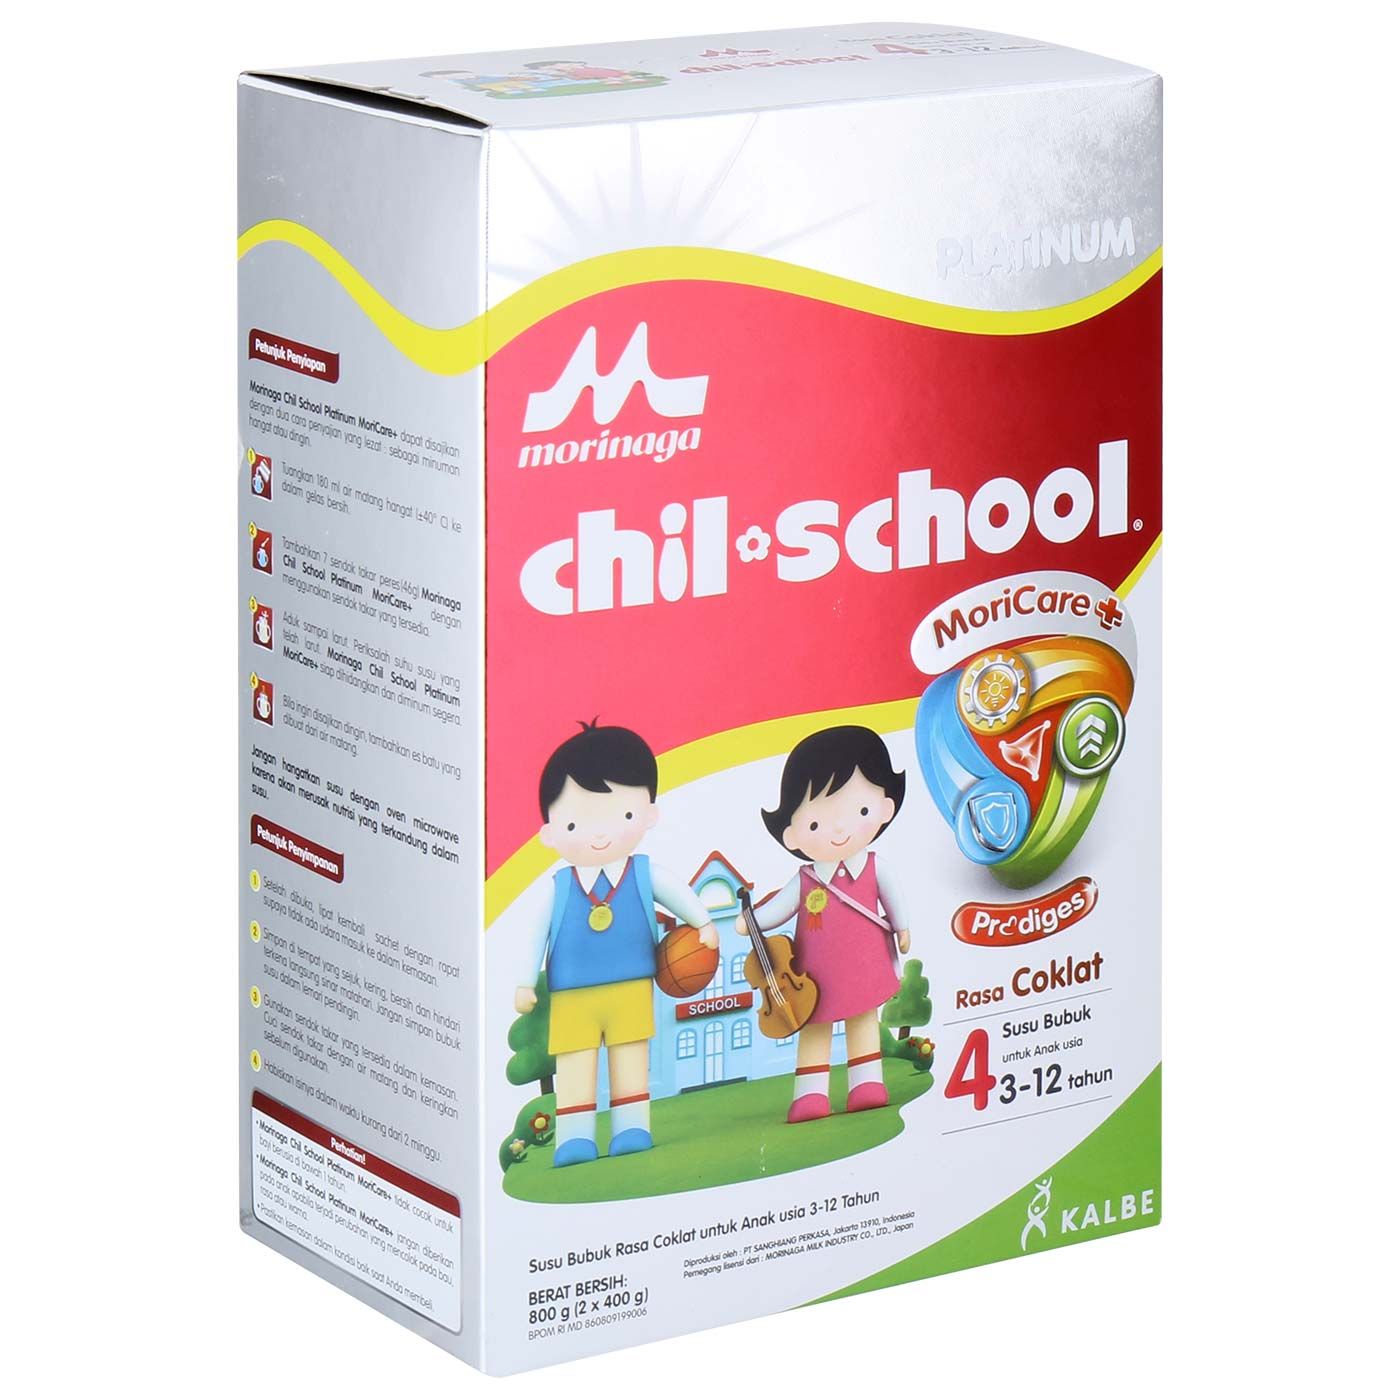 Morinaga Chil School Platinum Moricare  Coklat 800gr Box - 2